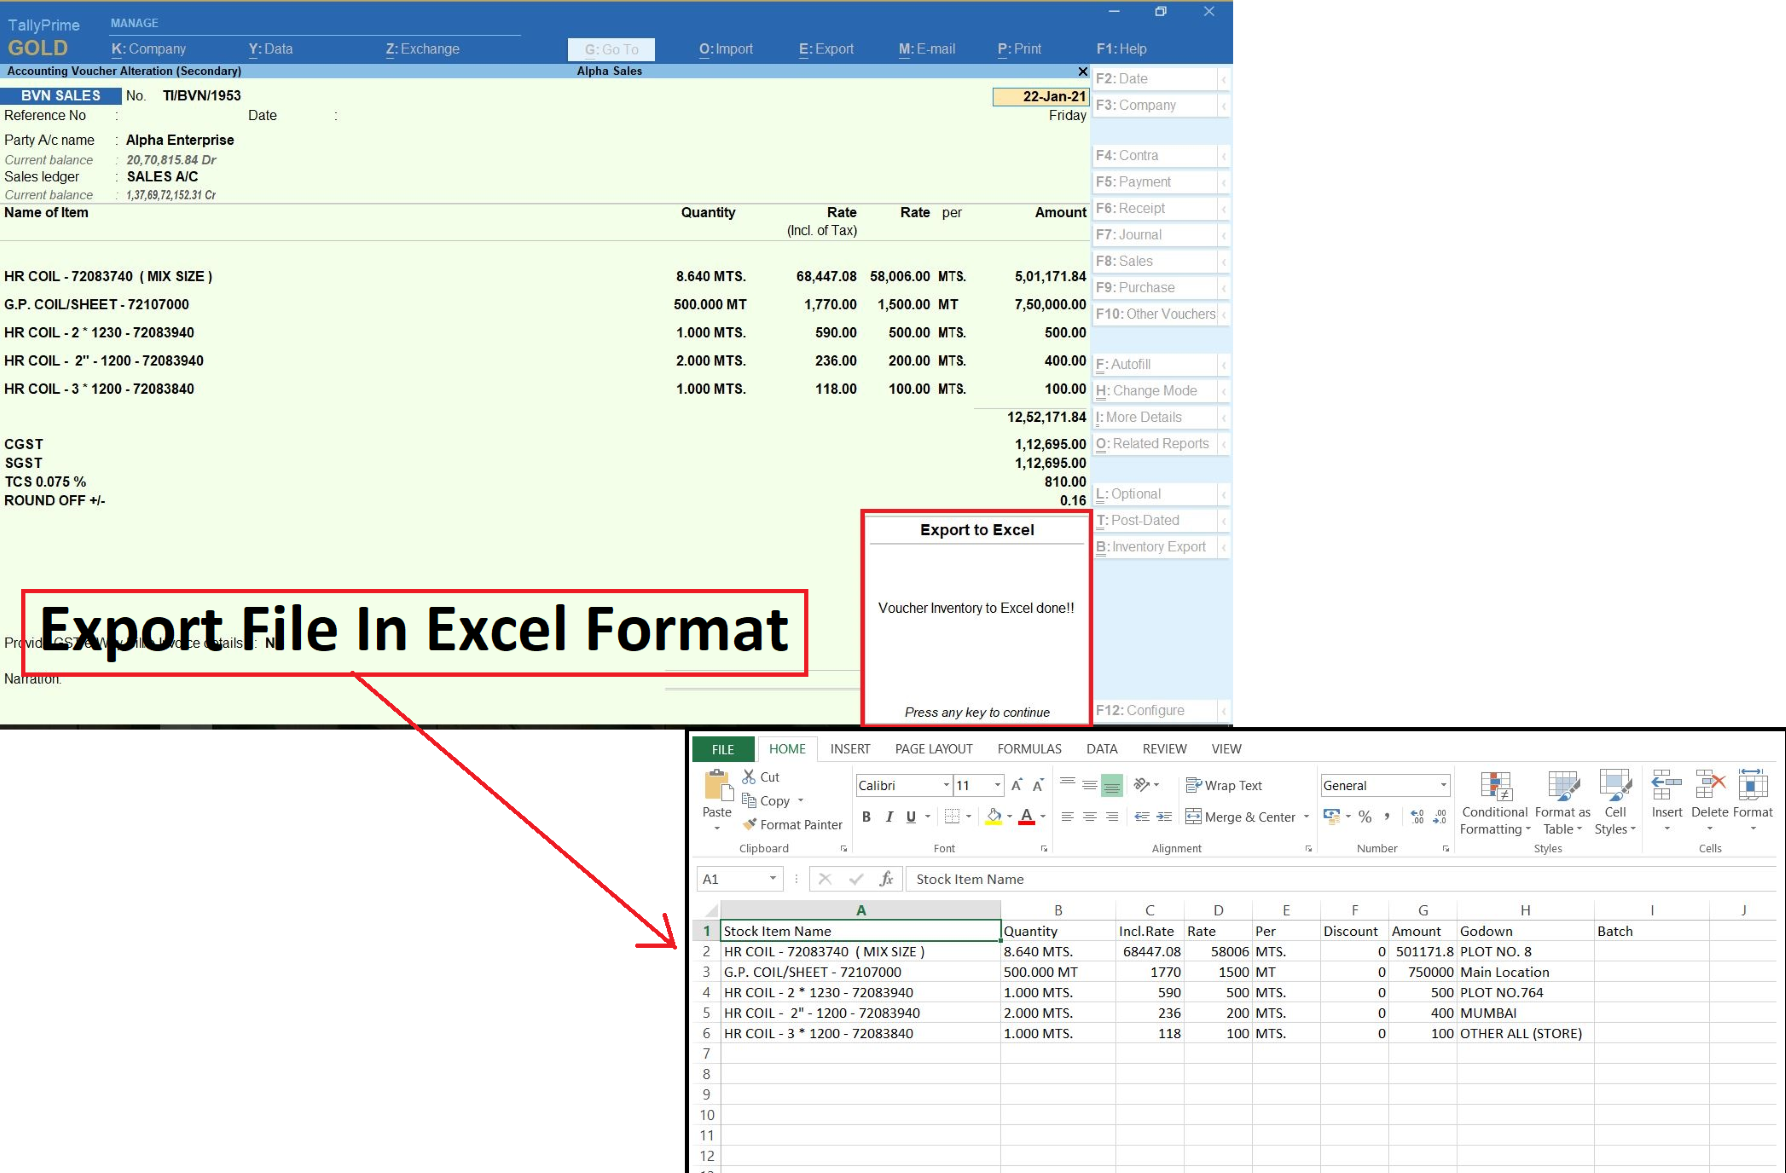 Voucher Inventory Details Export To Excel